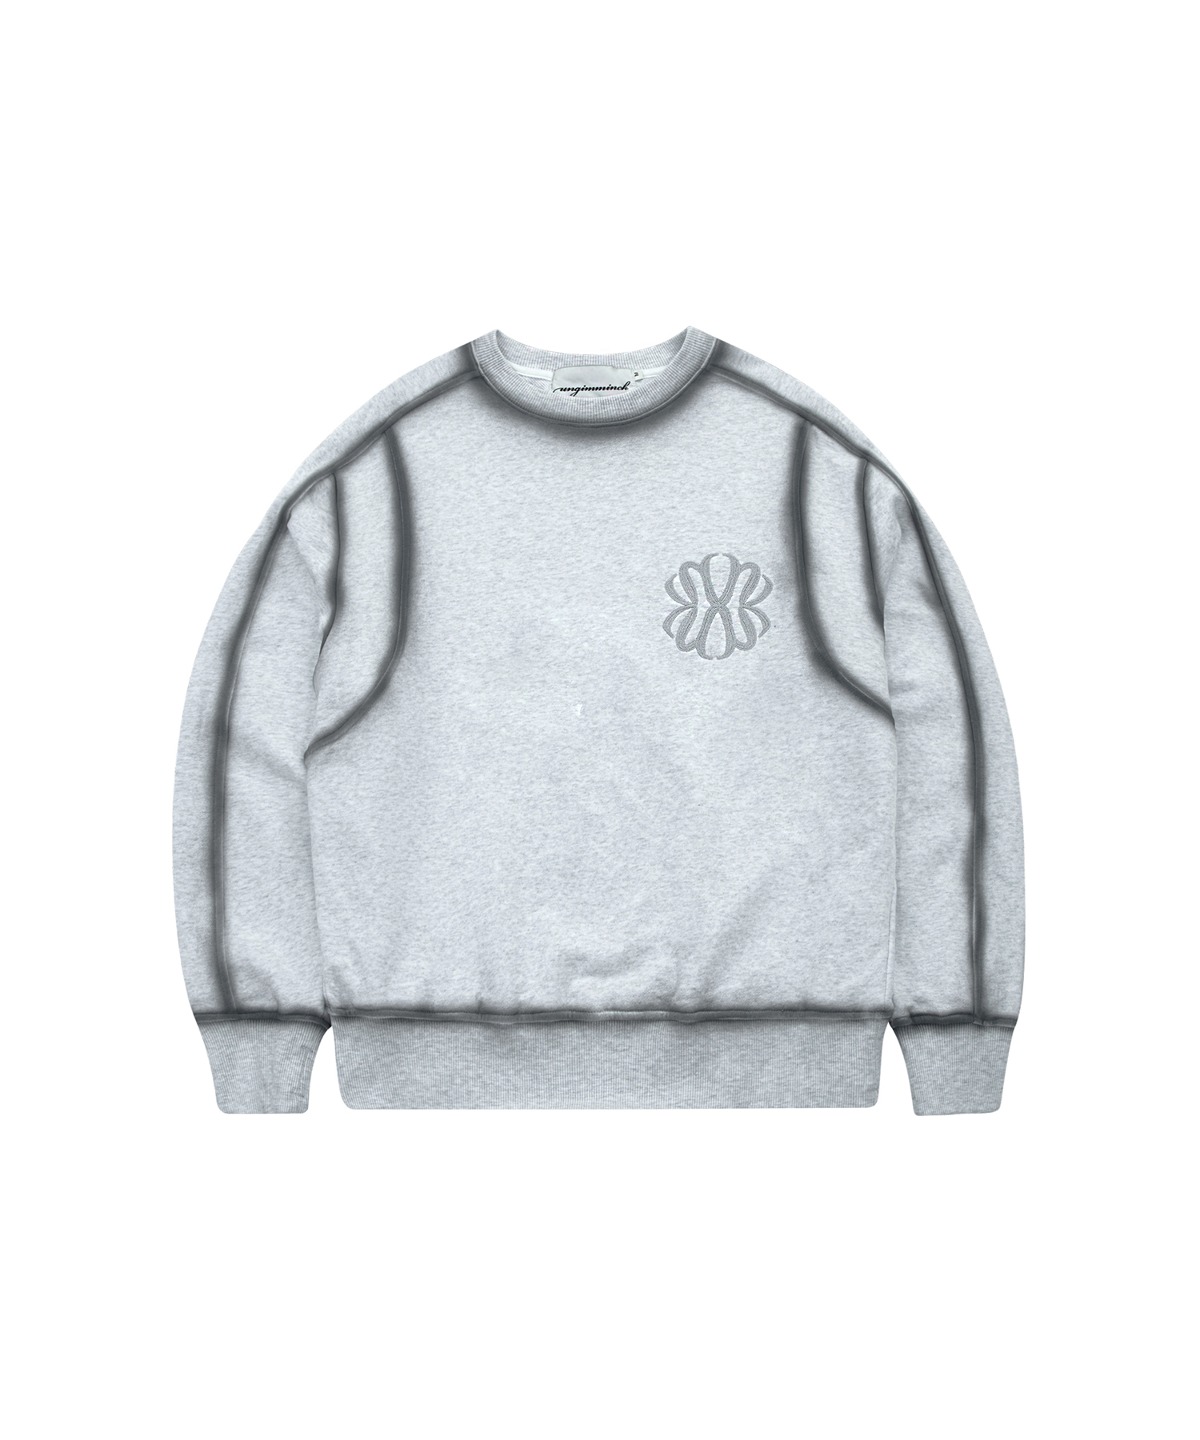 Oil brush Sweatshirt - Grey